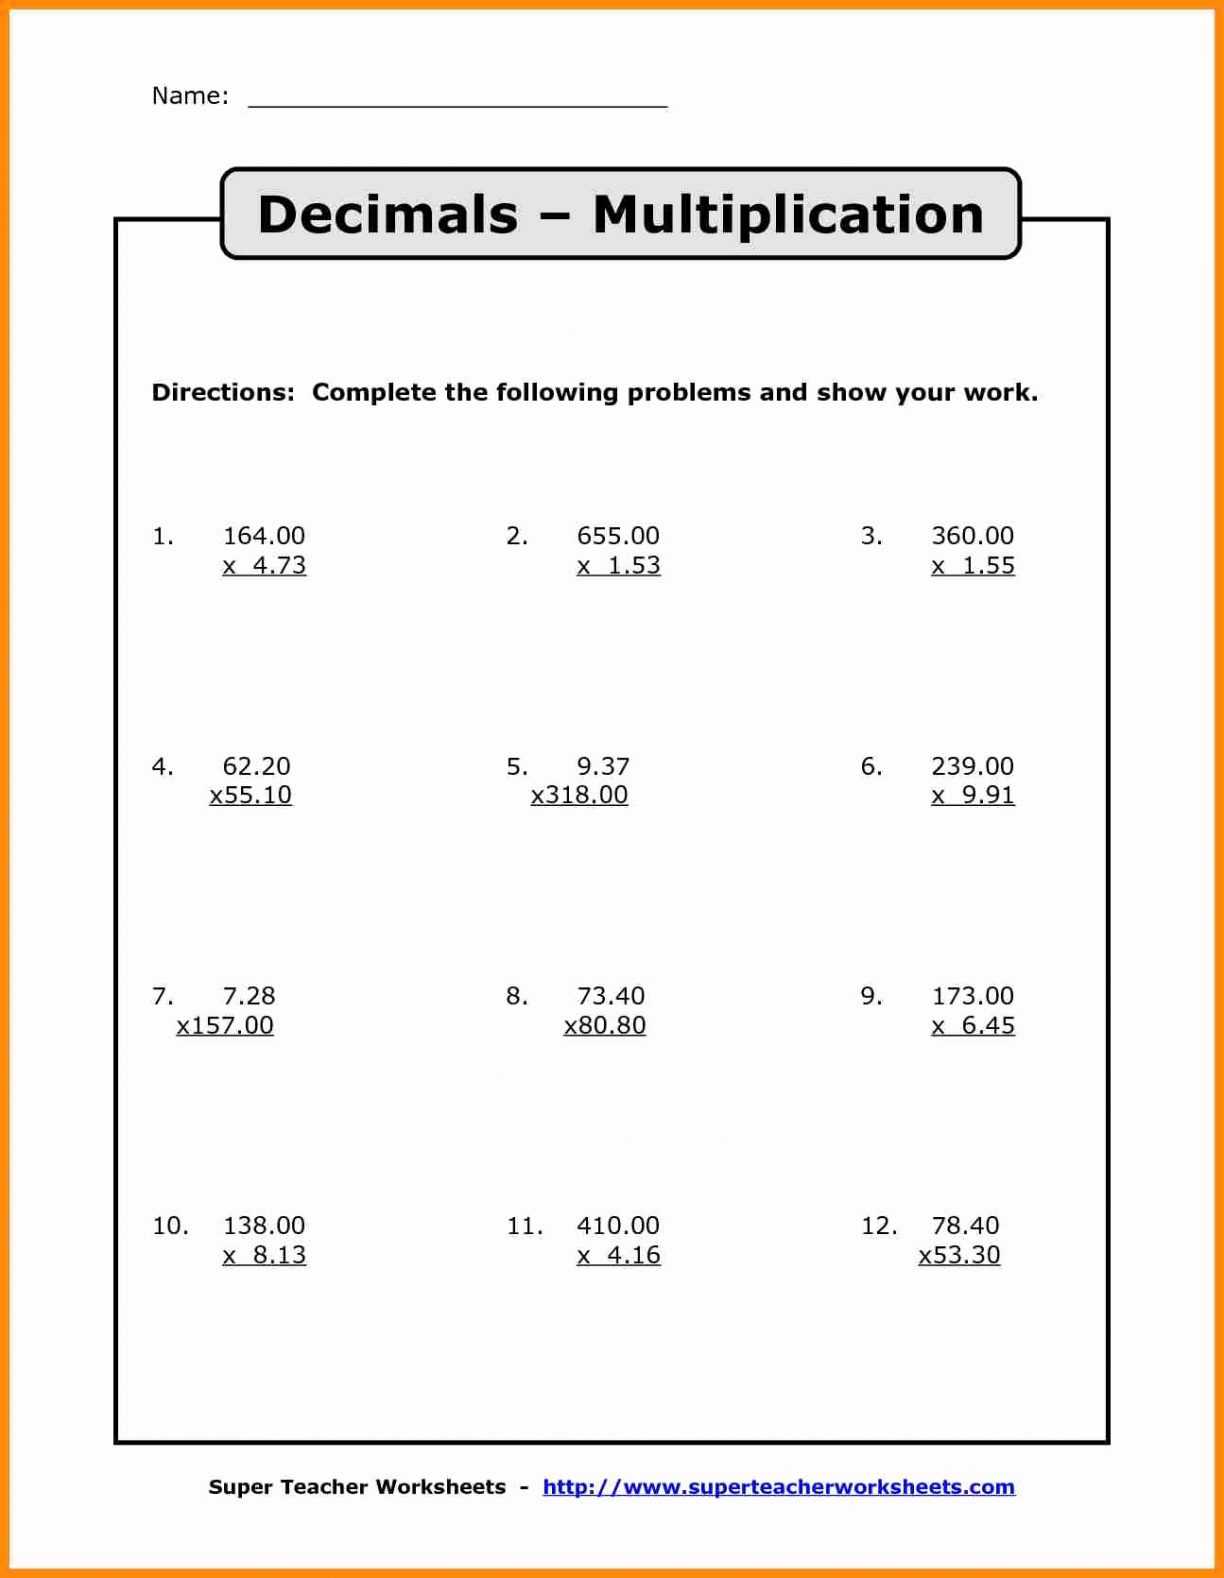 Multiplying Decimals by whole Numbers Worksheet Along with Decimals Multiplying Decimals Wordroblems Worksheet Worksheets Free